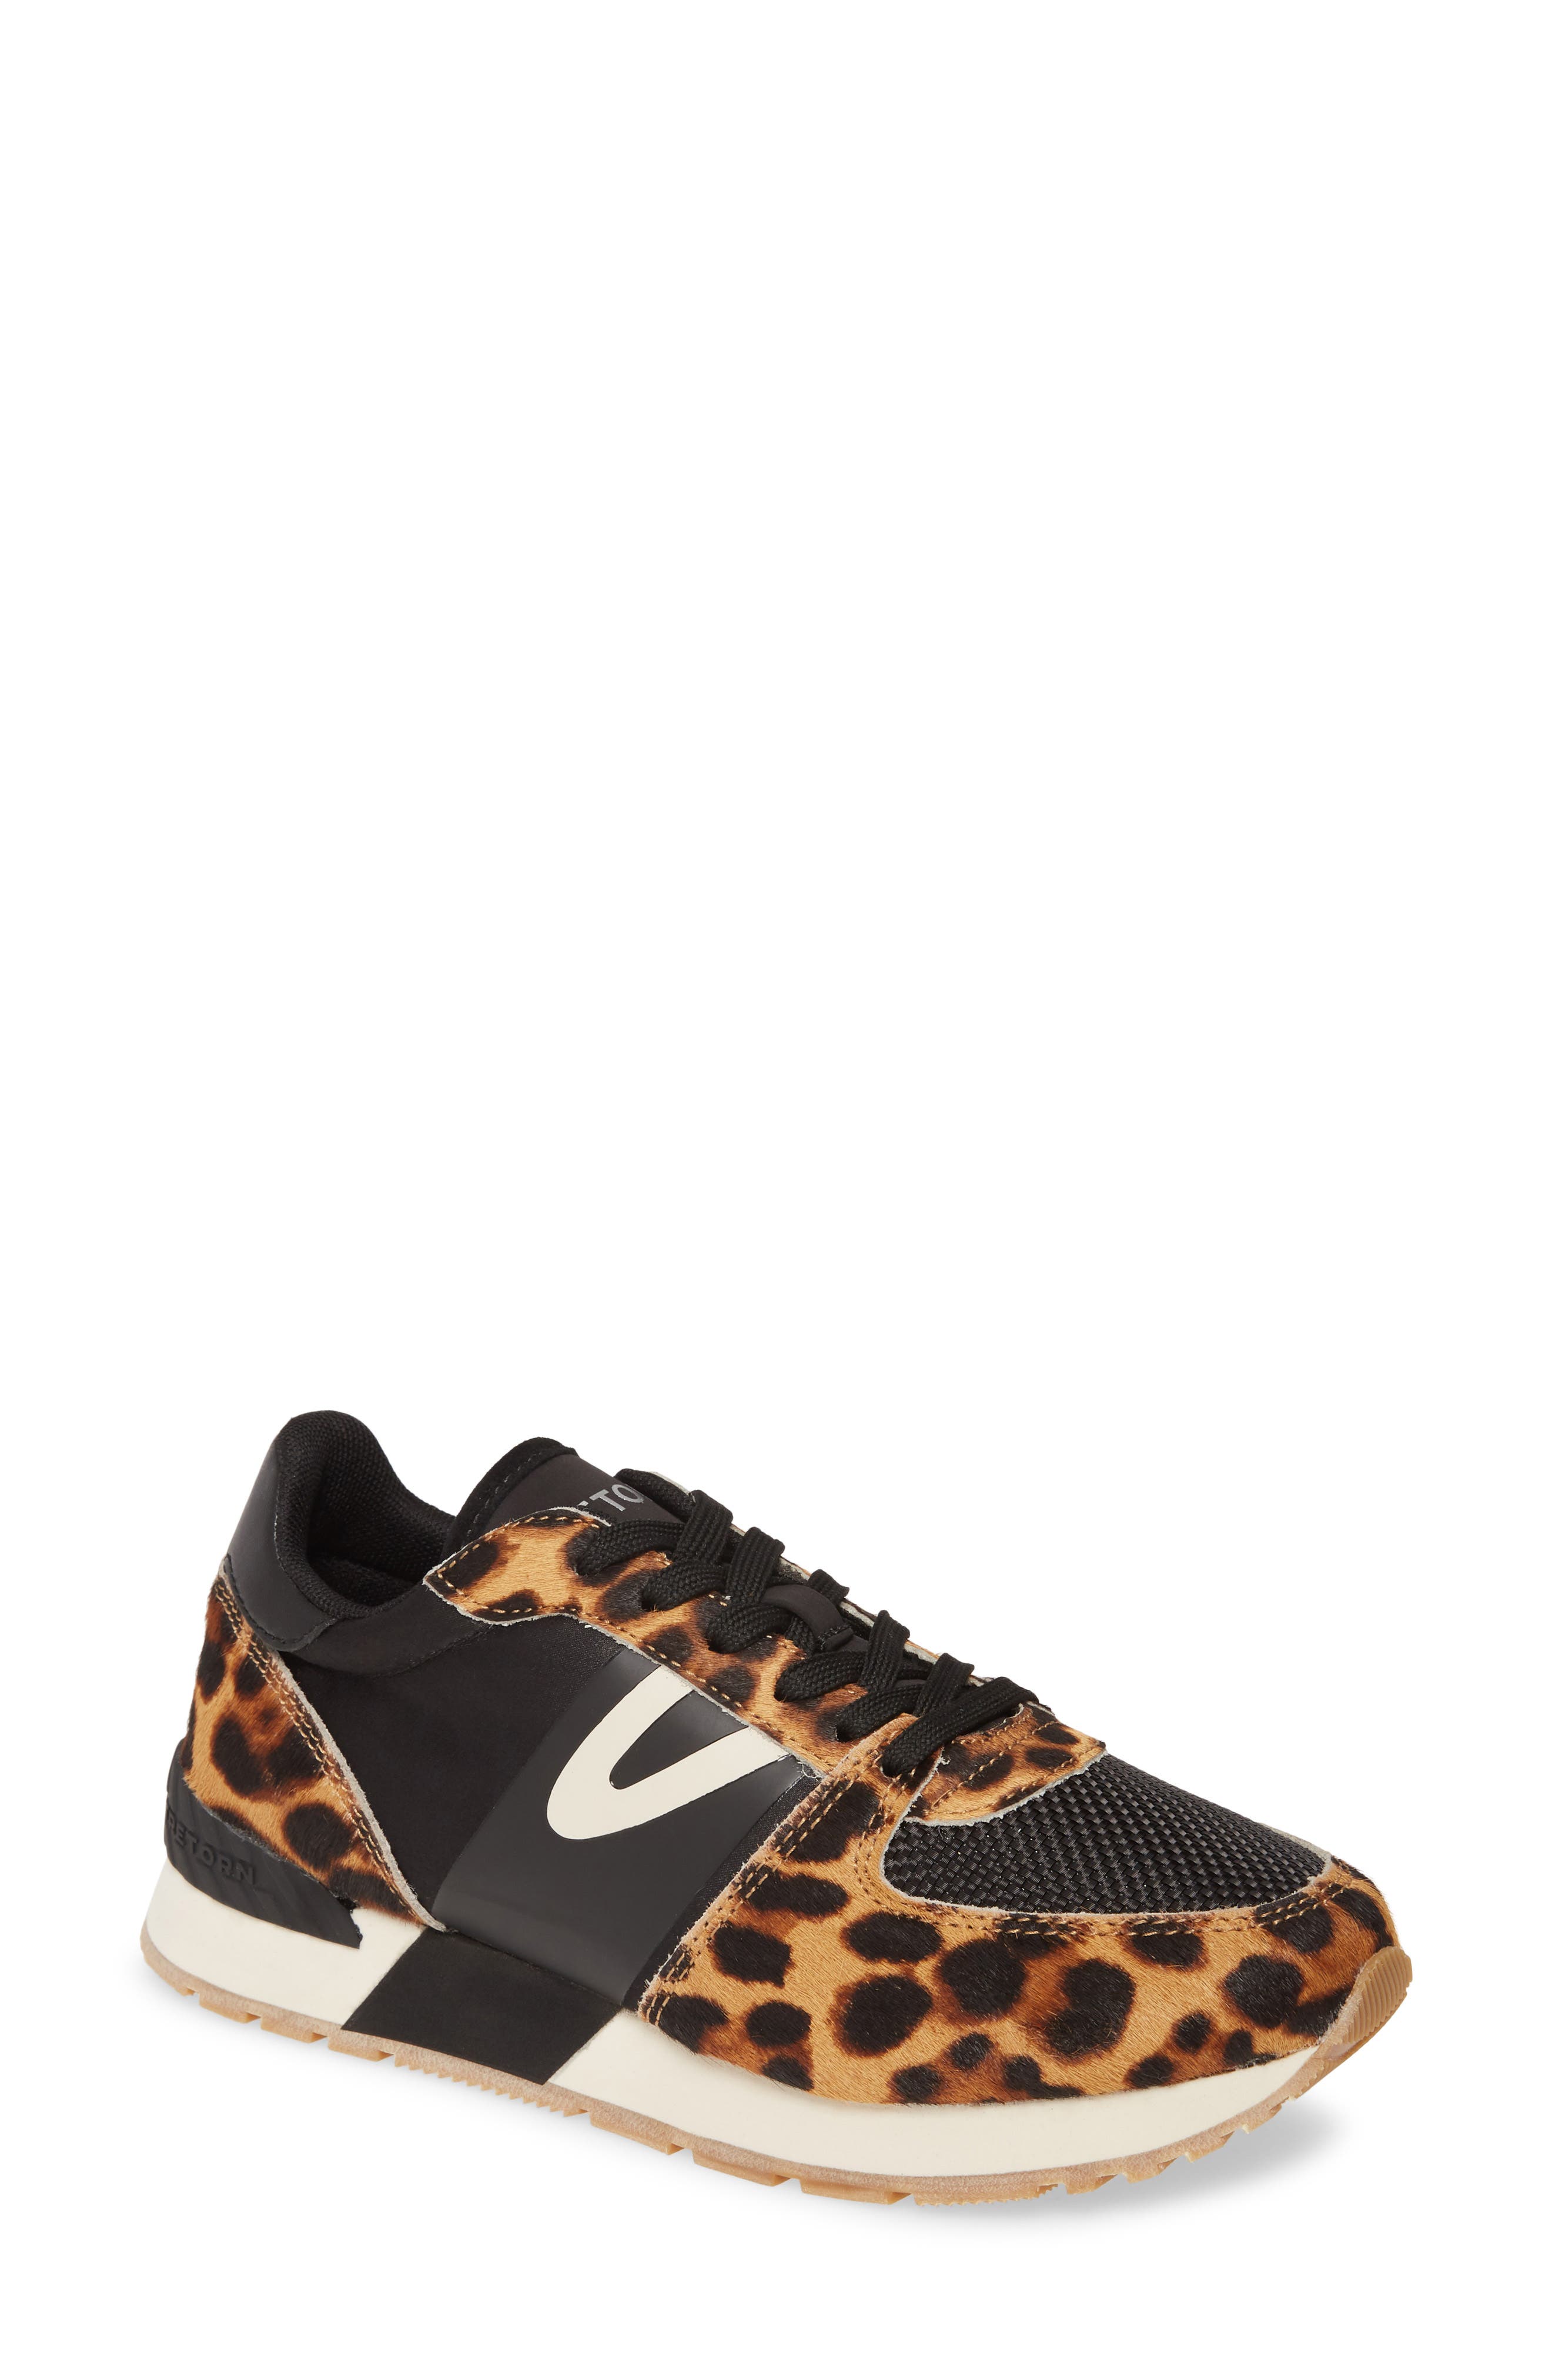 tretorn shoes leopard